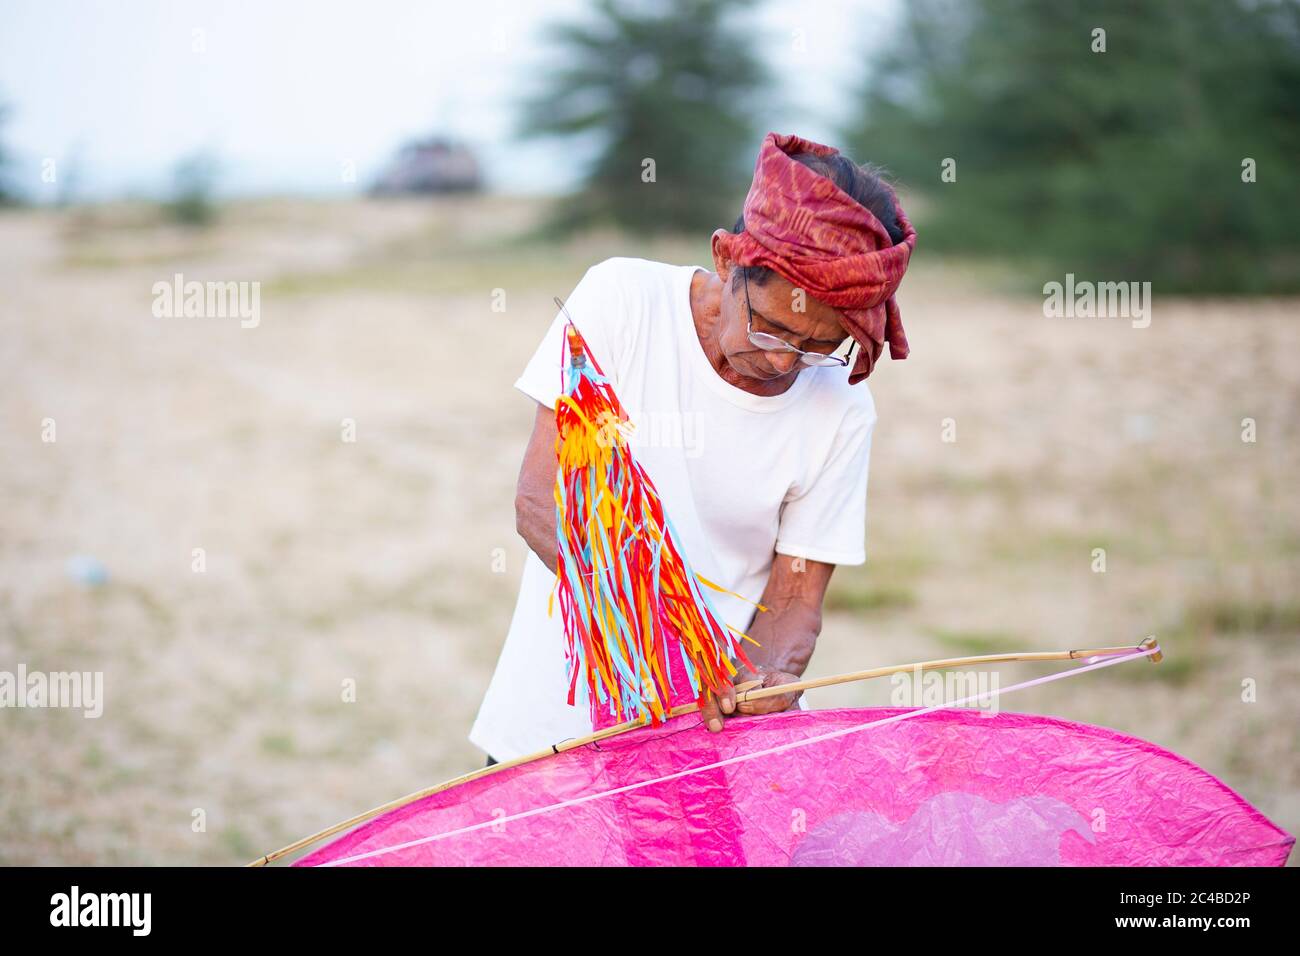 Portrait of the malaysia kite maker, Shafie Bin Jusoh Stock Photo